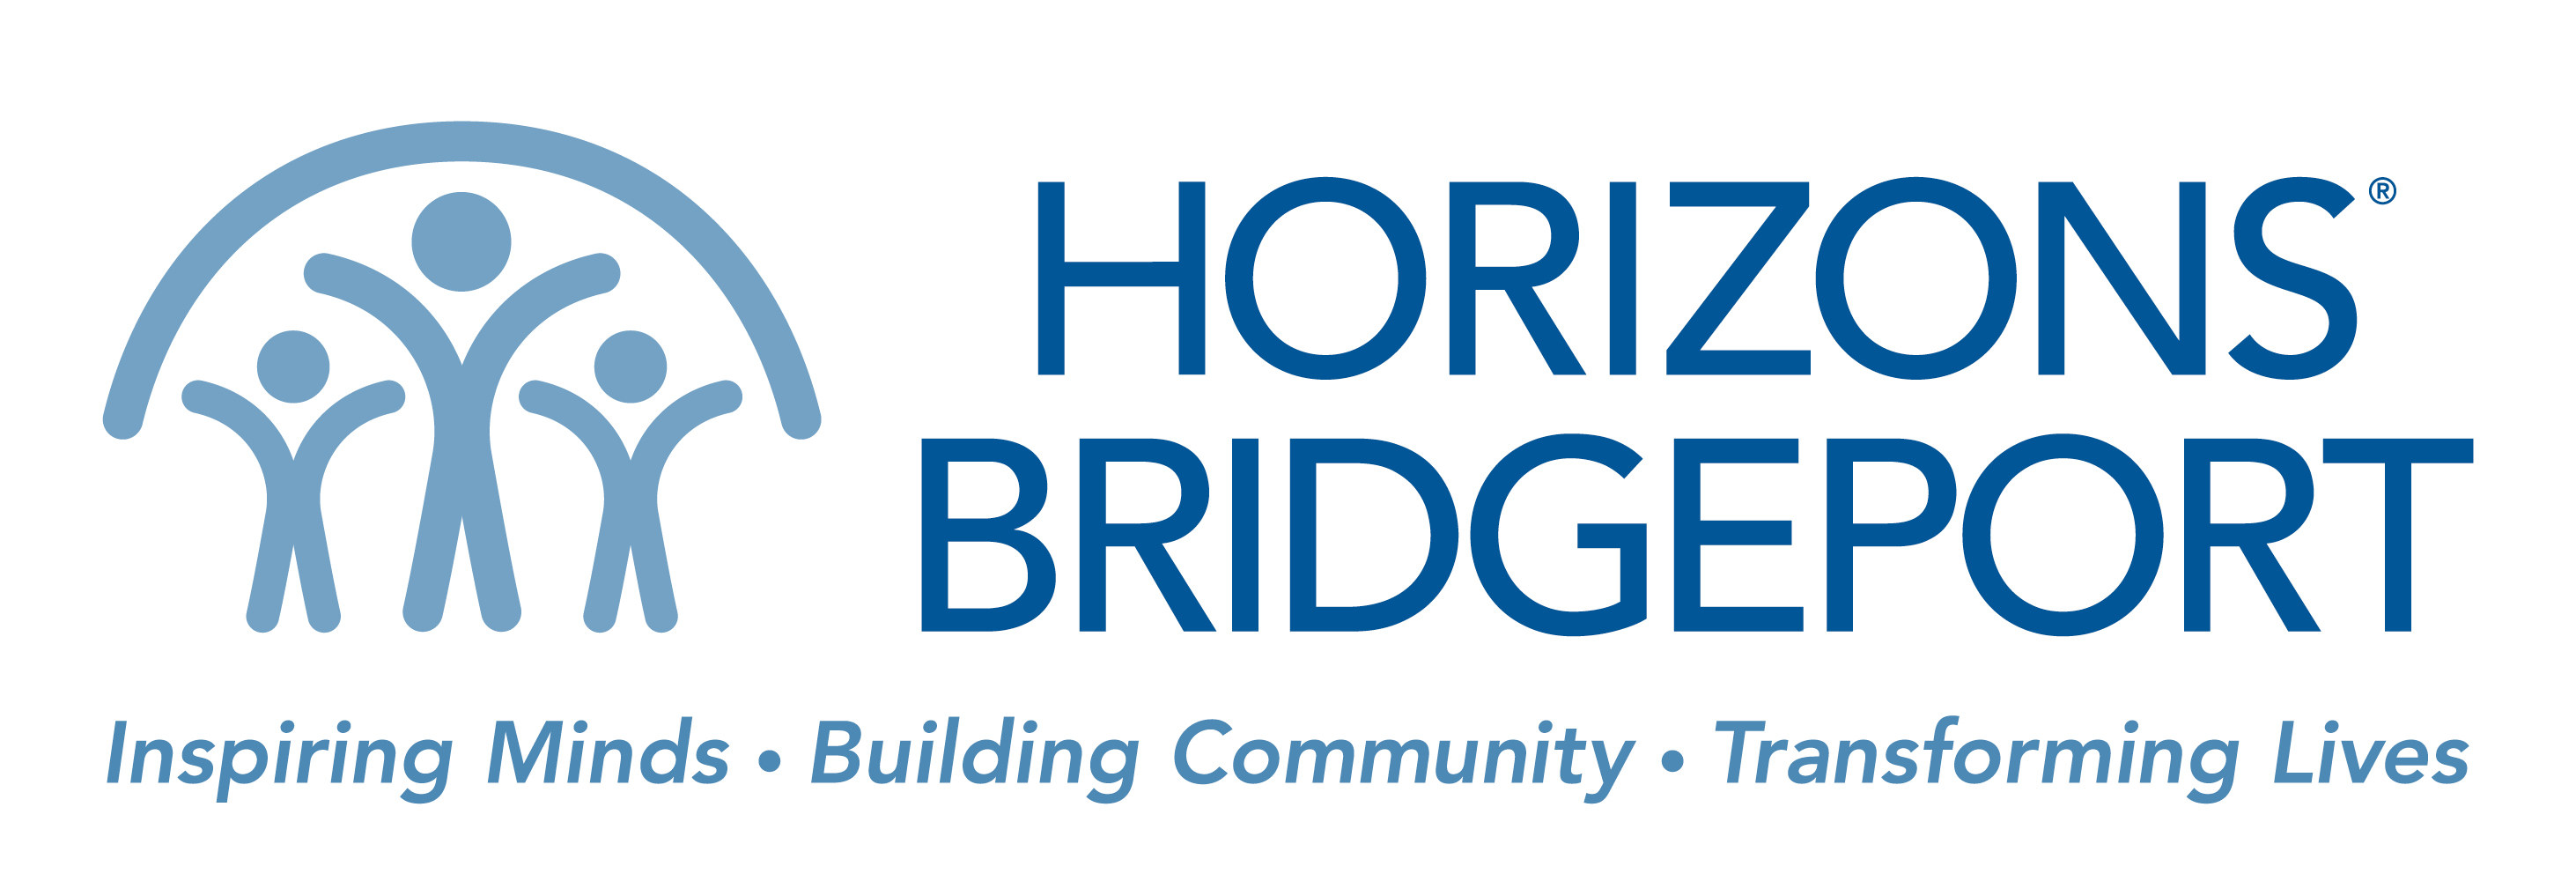 Horizons Bridgeport, Inc. logo